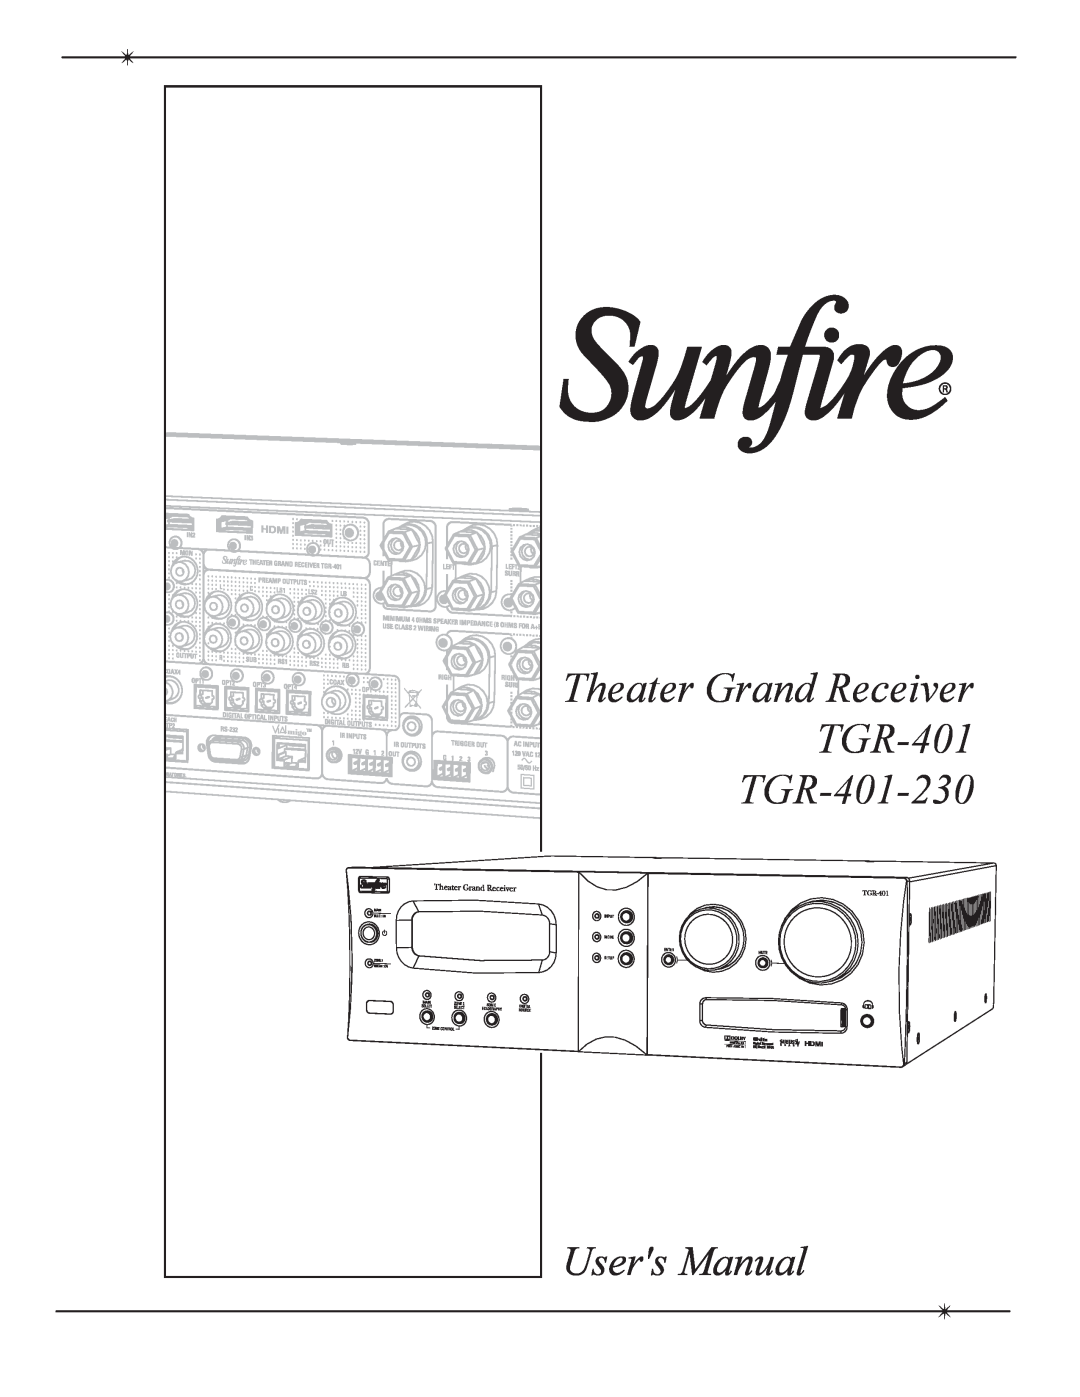 Sunfire manual Theater Grand Receiver TGR-401 TGR-401-230 